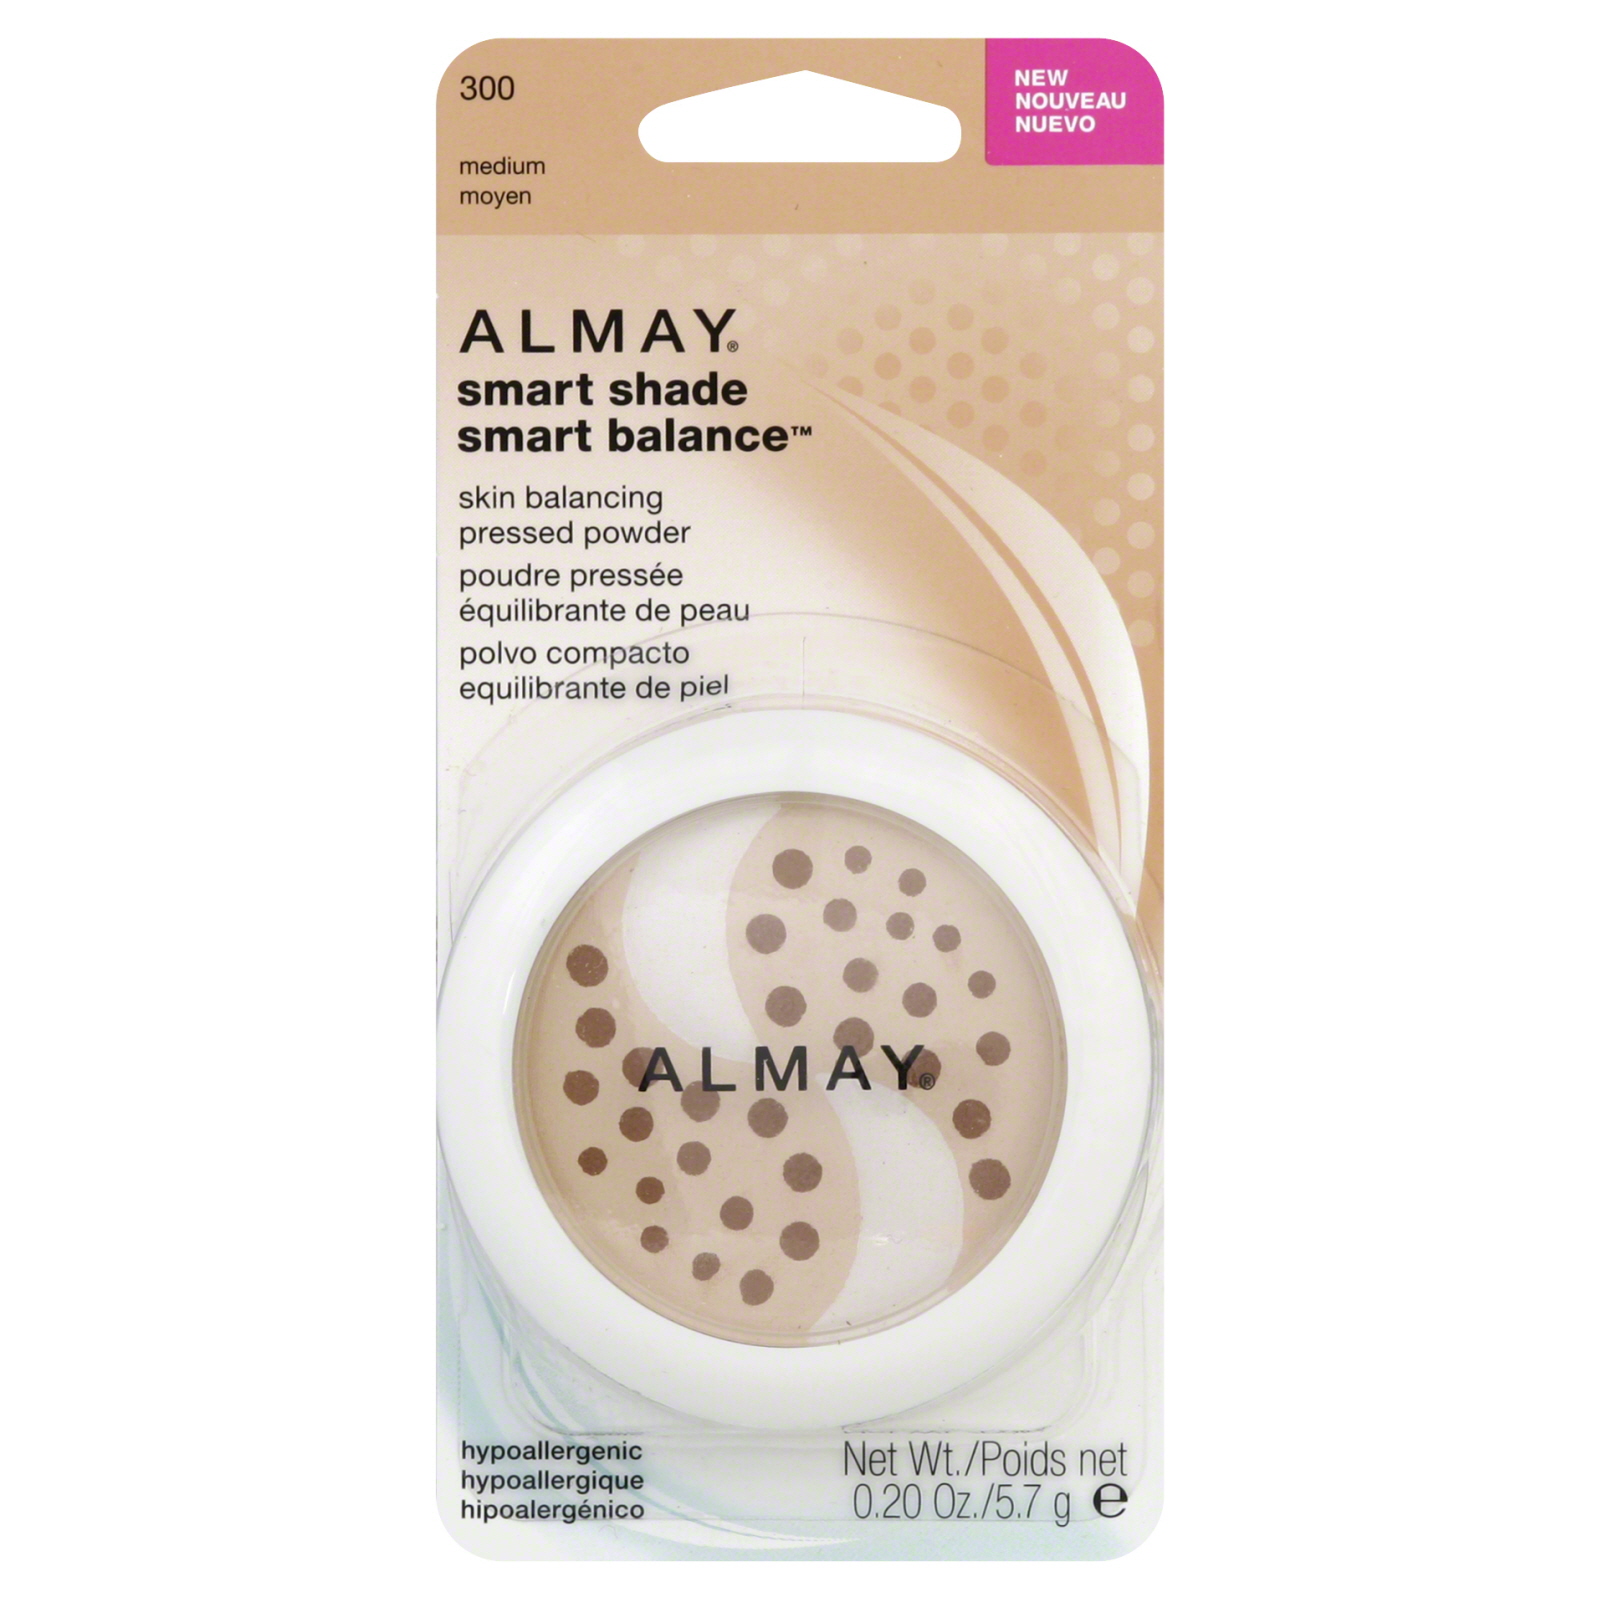 Almay Smart Shade Smart Balance Pressed Powder, Skin Balancing, Medium 300, 0.20 oz (5.7 g)